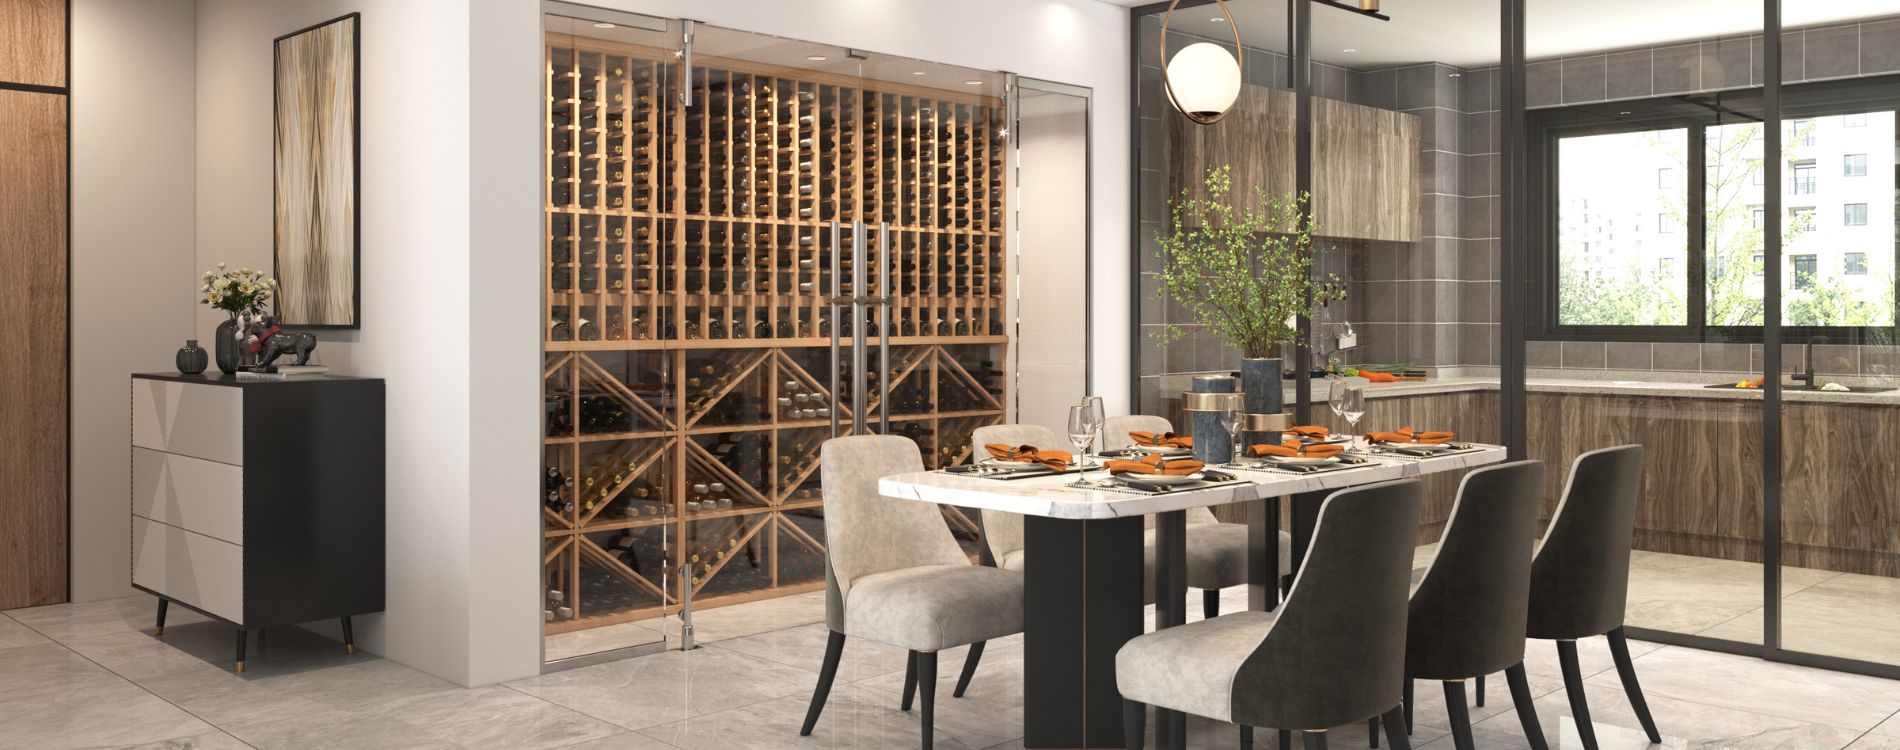 Dining Room Wine Storage. Custom Glass Wine Cellar with Wooden Kitchen Racks